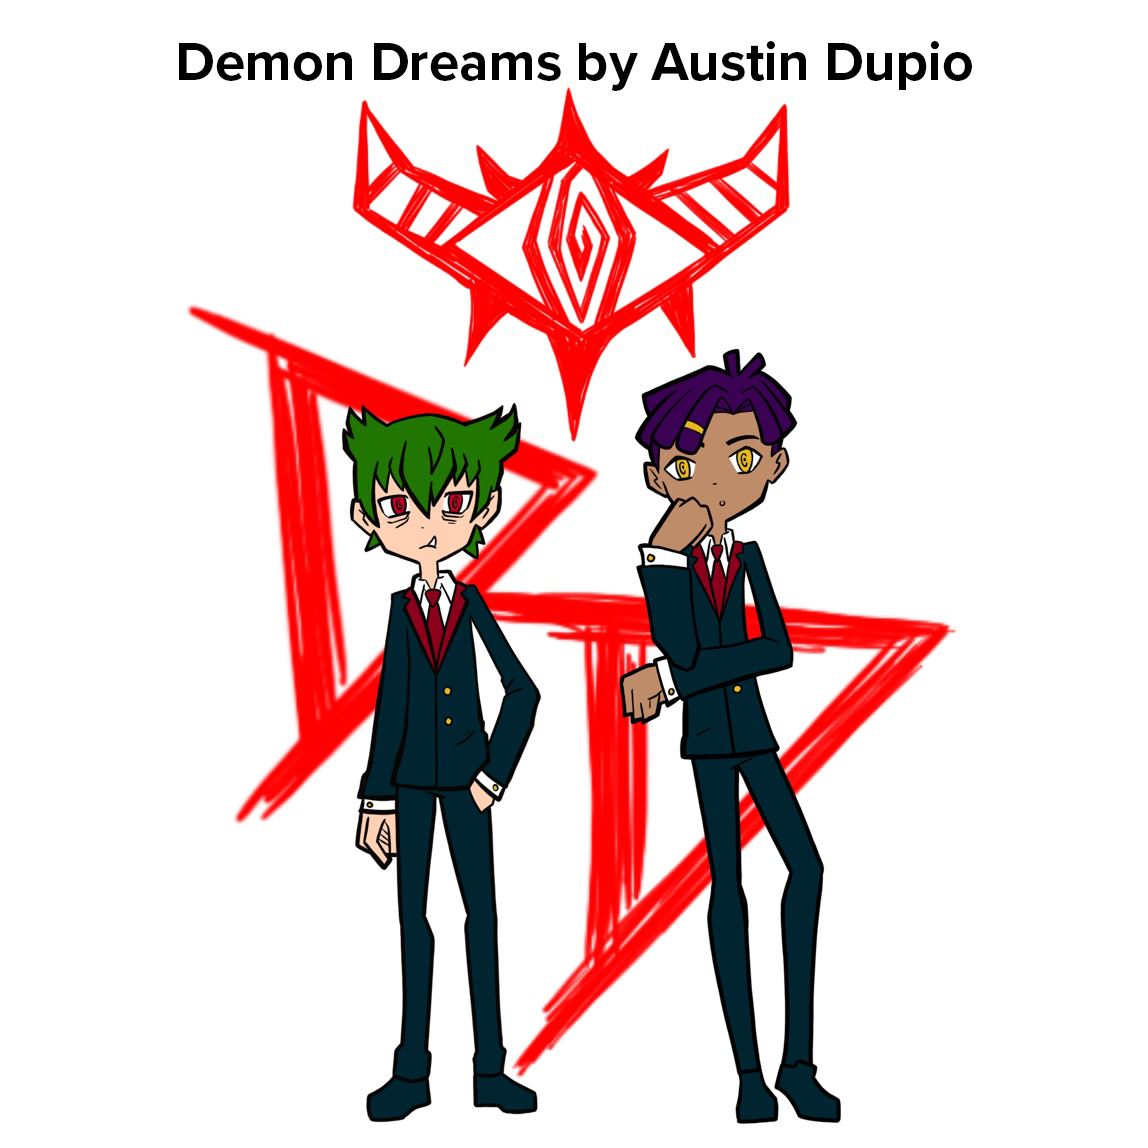 Demon Dreams by Austin Dupio